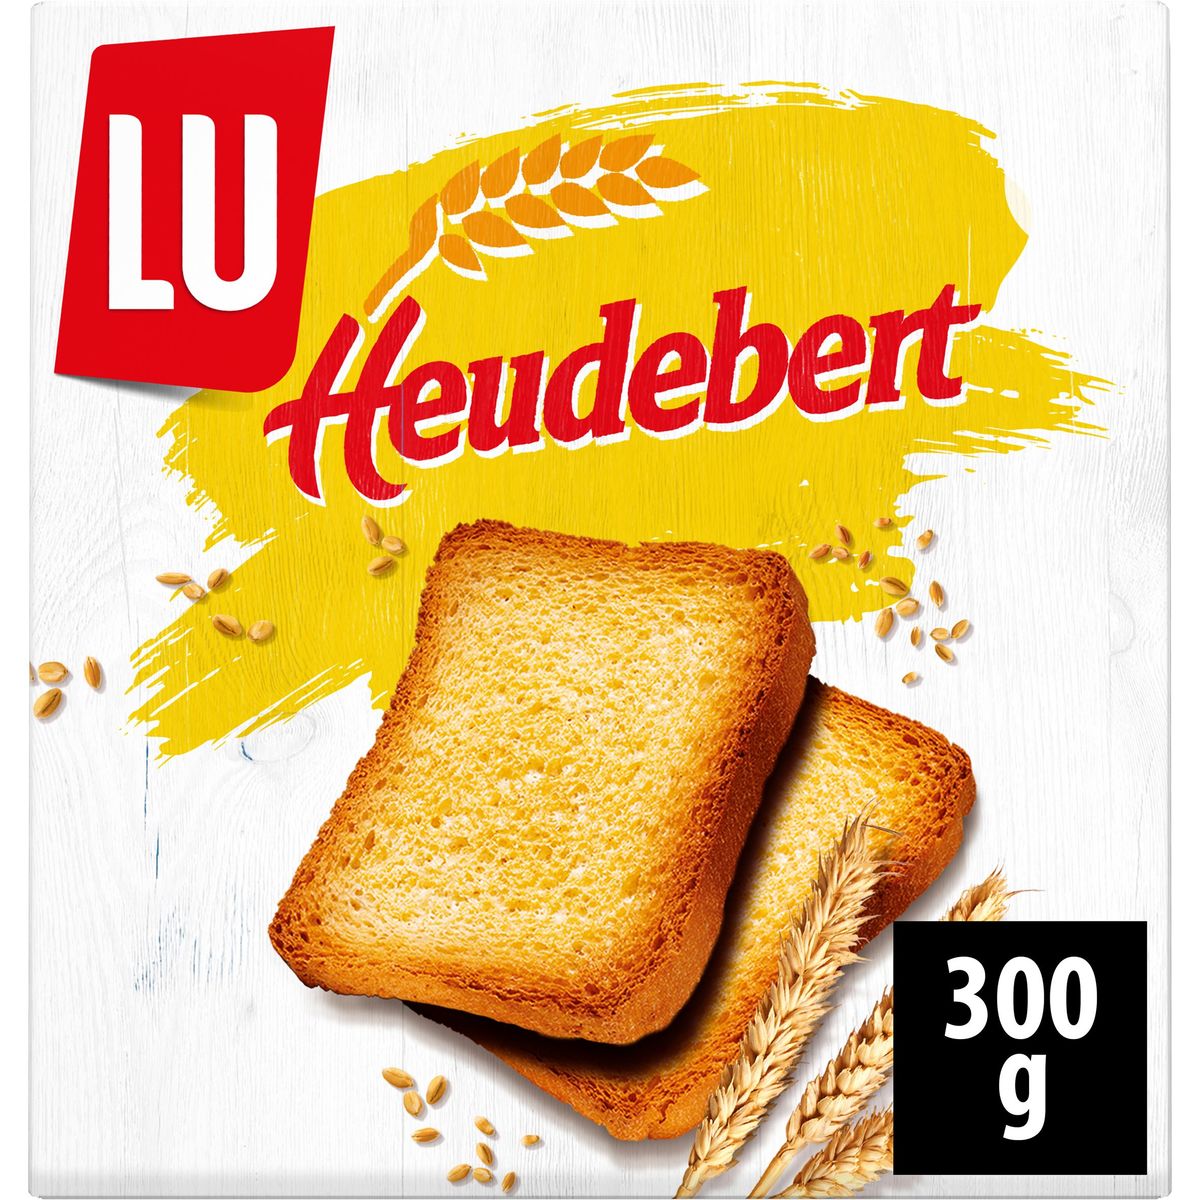 LU Heudebert Biscottes Naturel 300 g